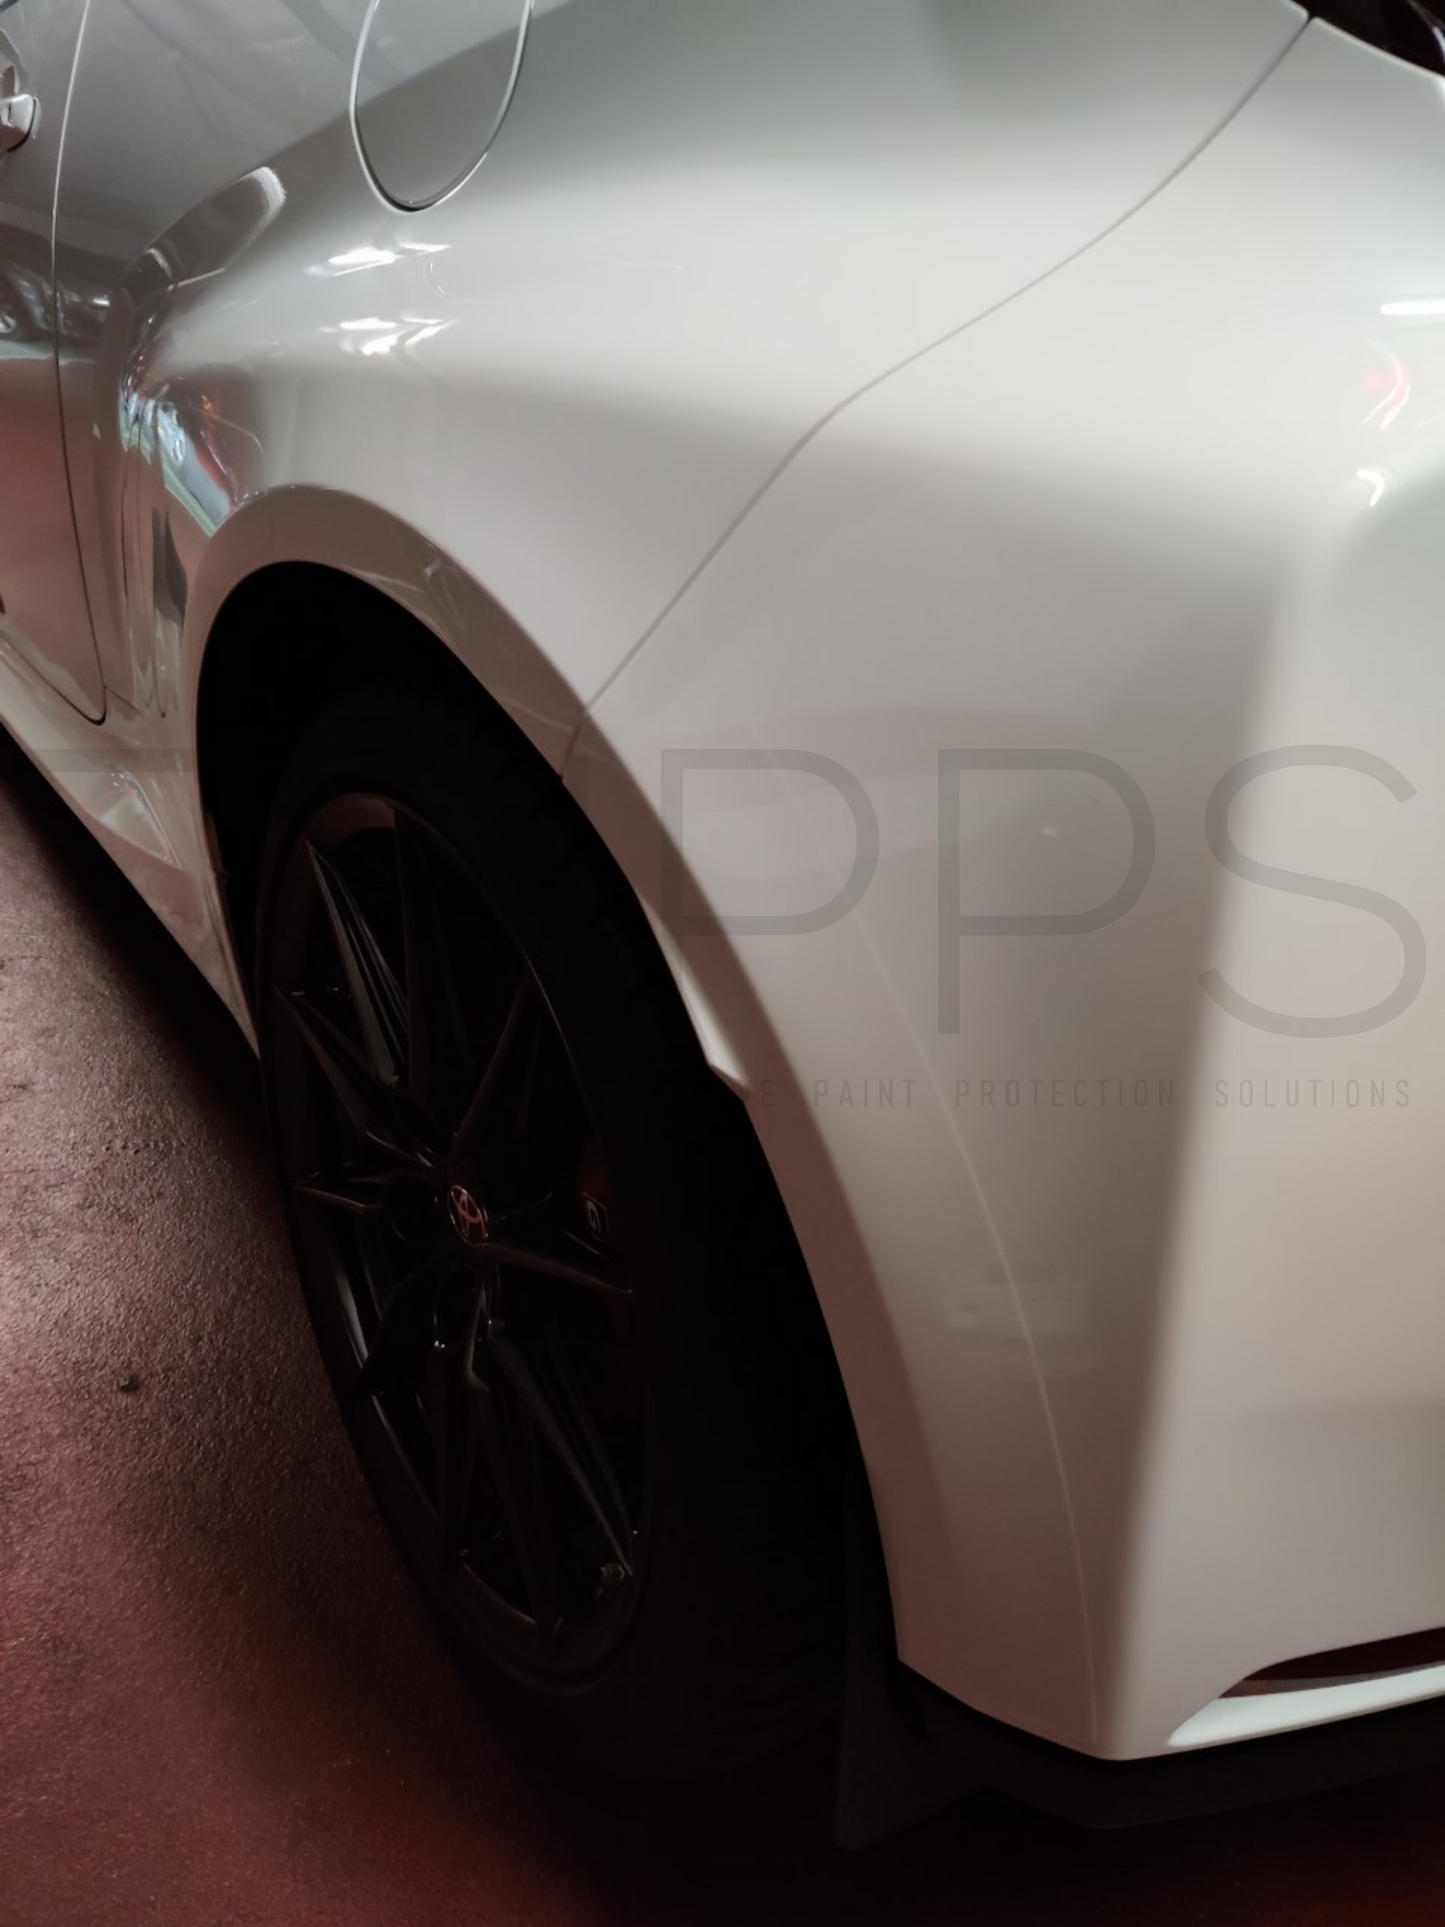 Toyota Yaris GR Rear Bumper Arch Paint Protection Film Kit